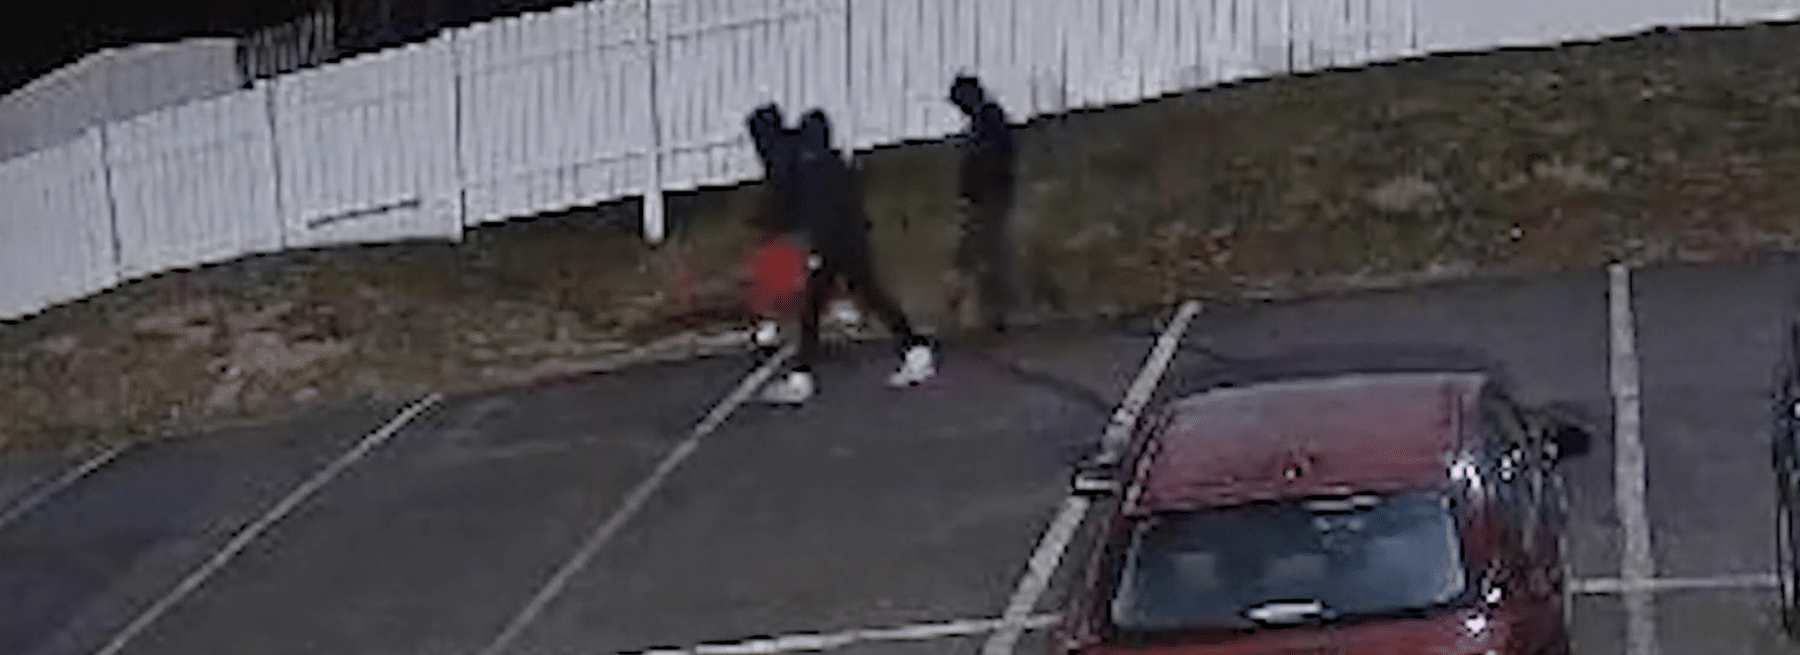 Three masked trespassers at auto dealership